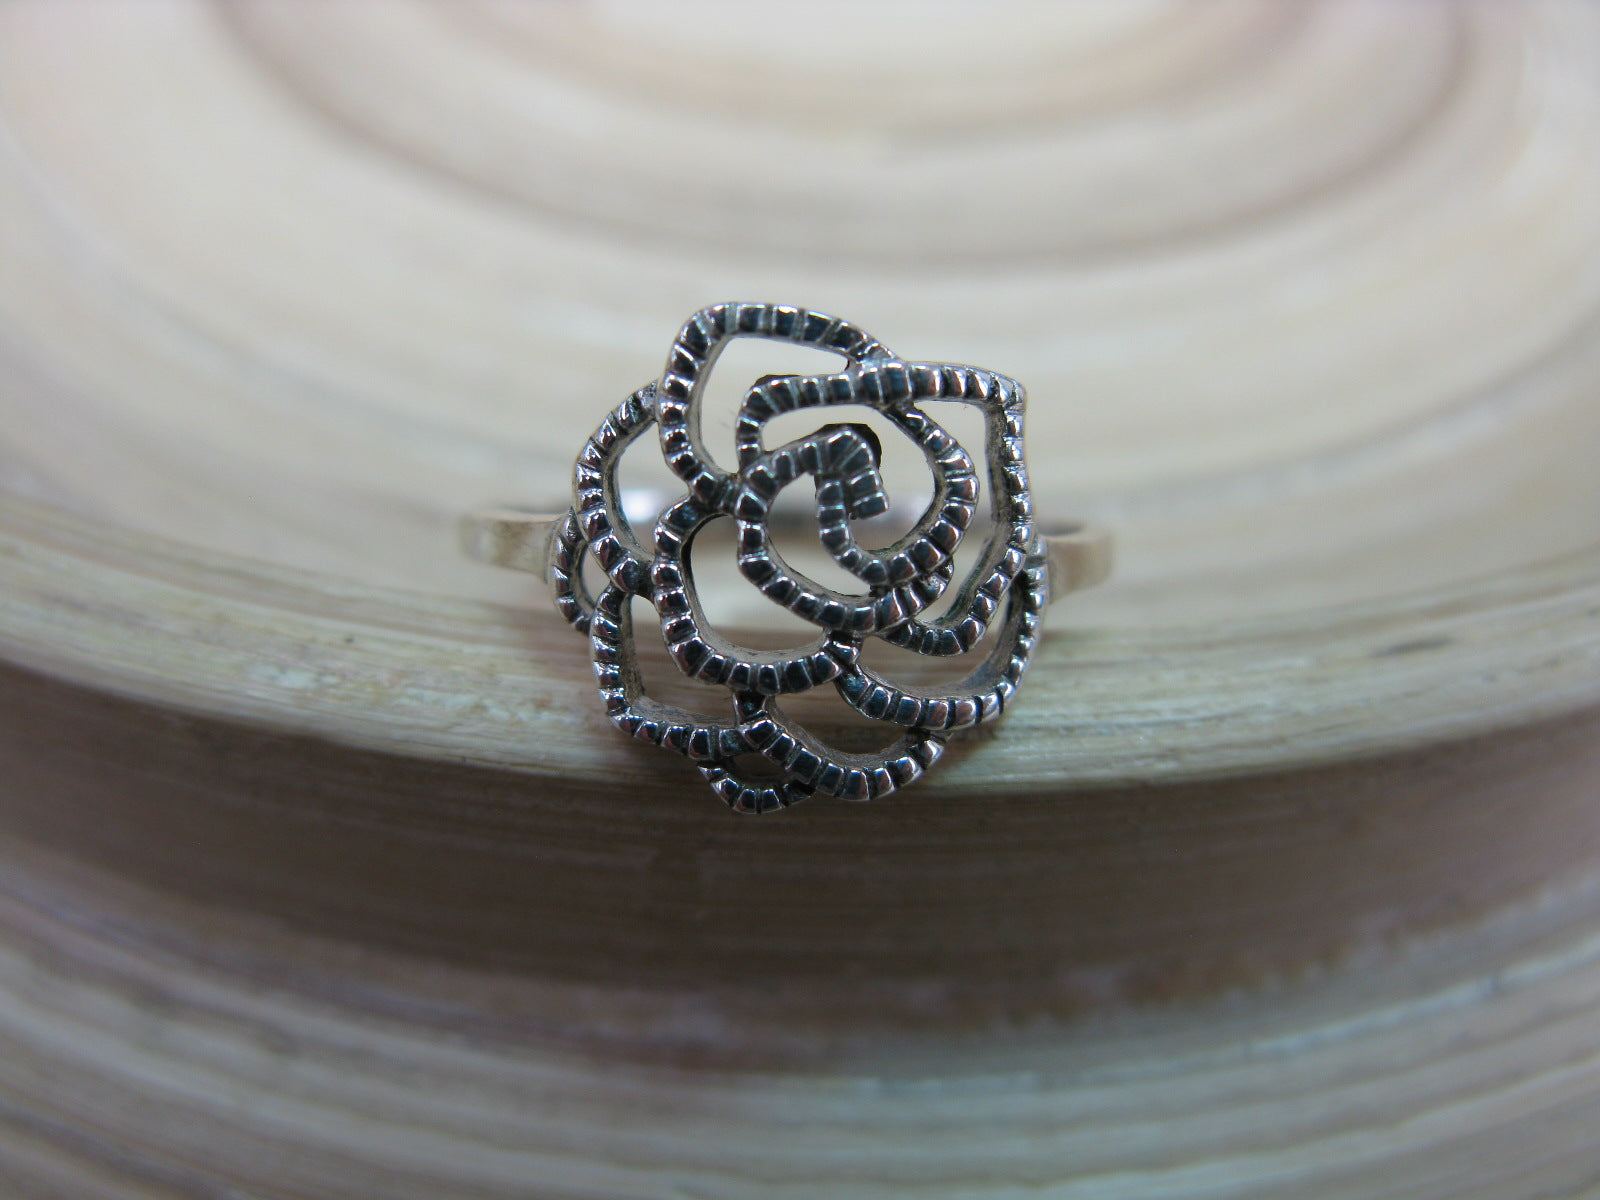 Rose Filigree Ring in 925 Stelring Silver